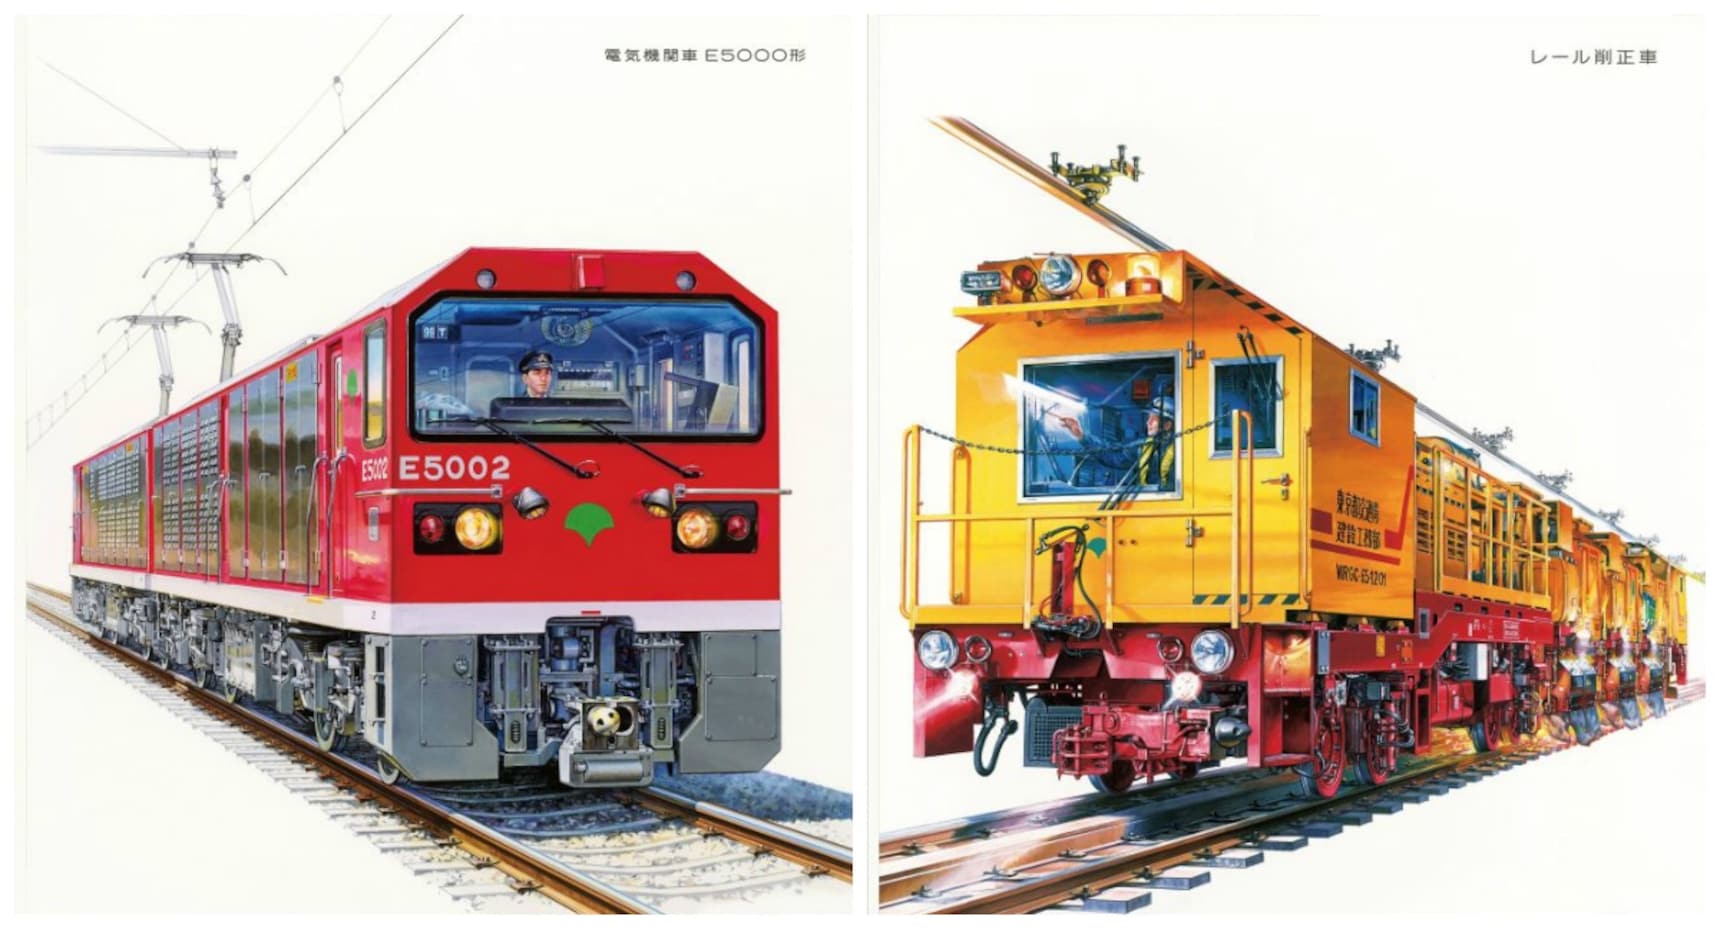 Retro Maintenance Train Illustrations